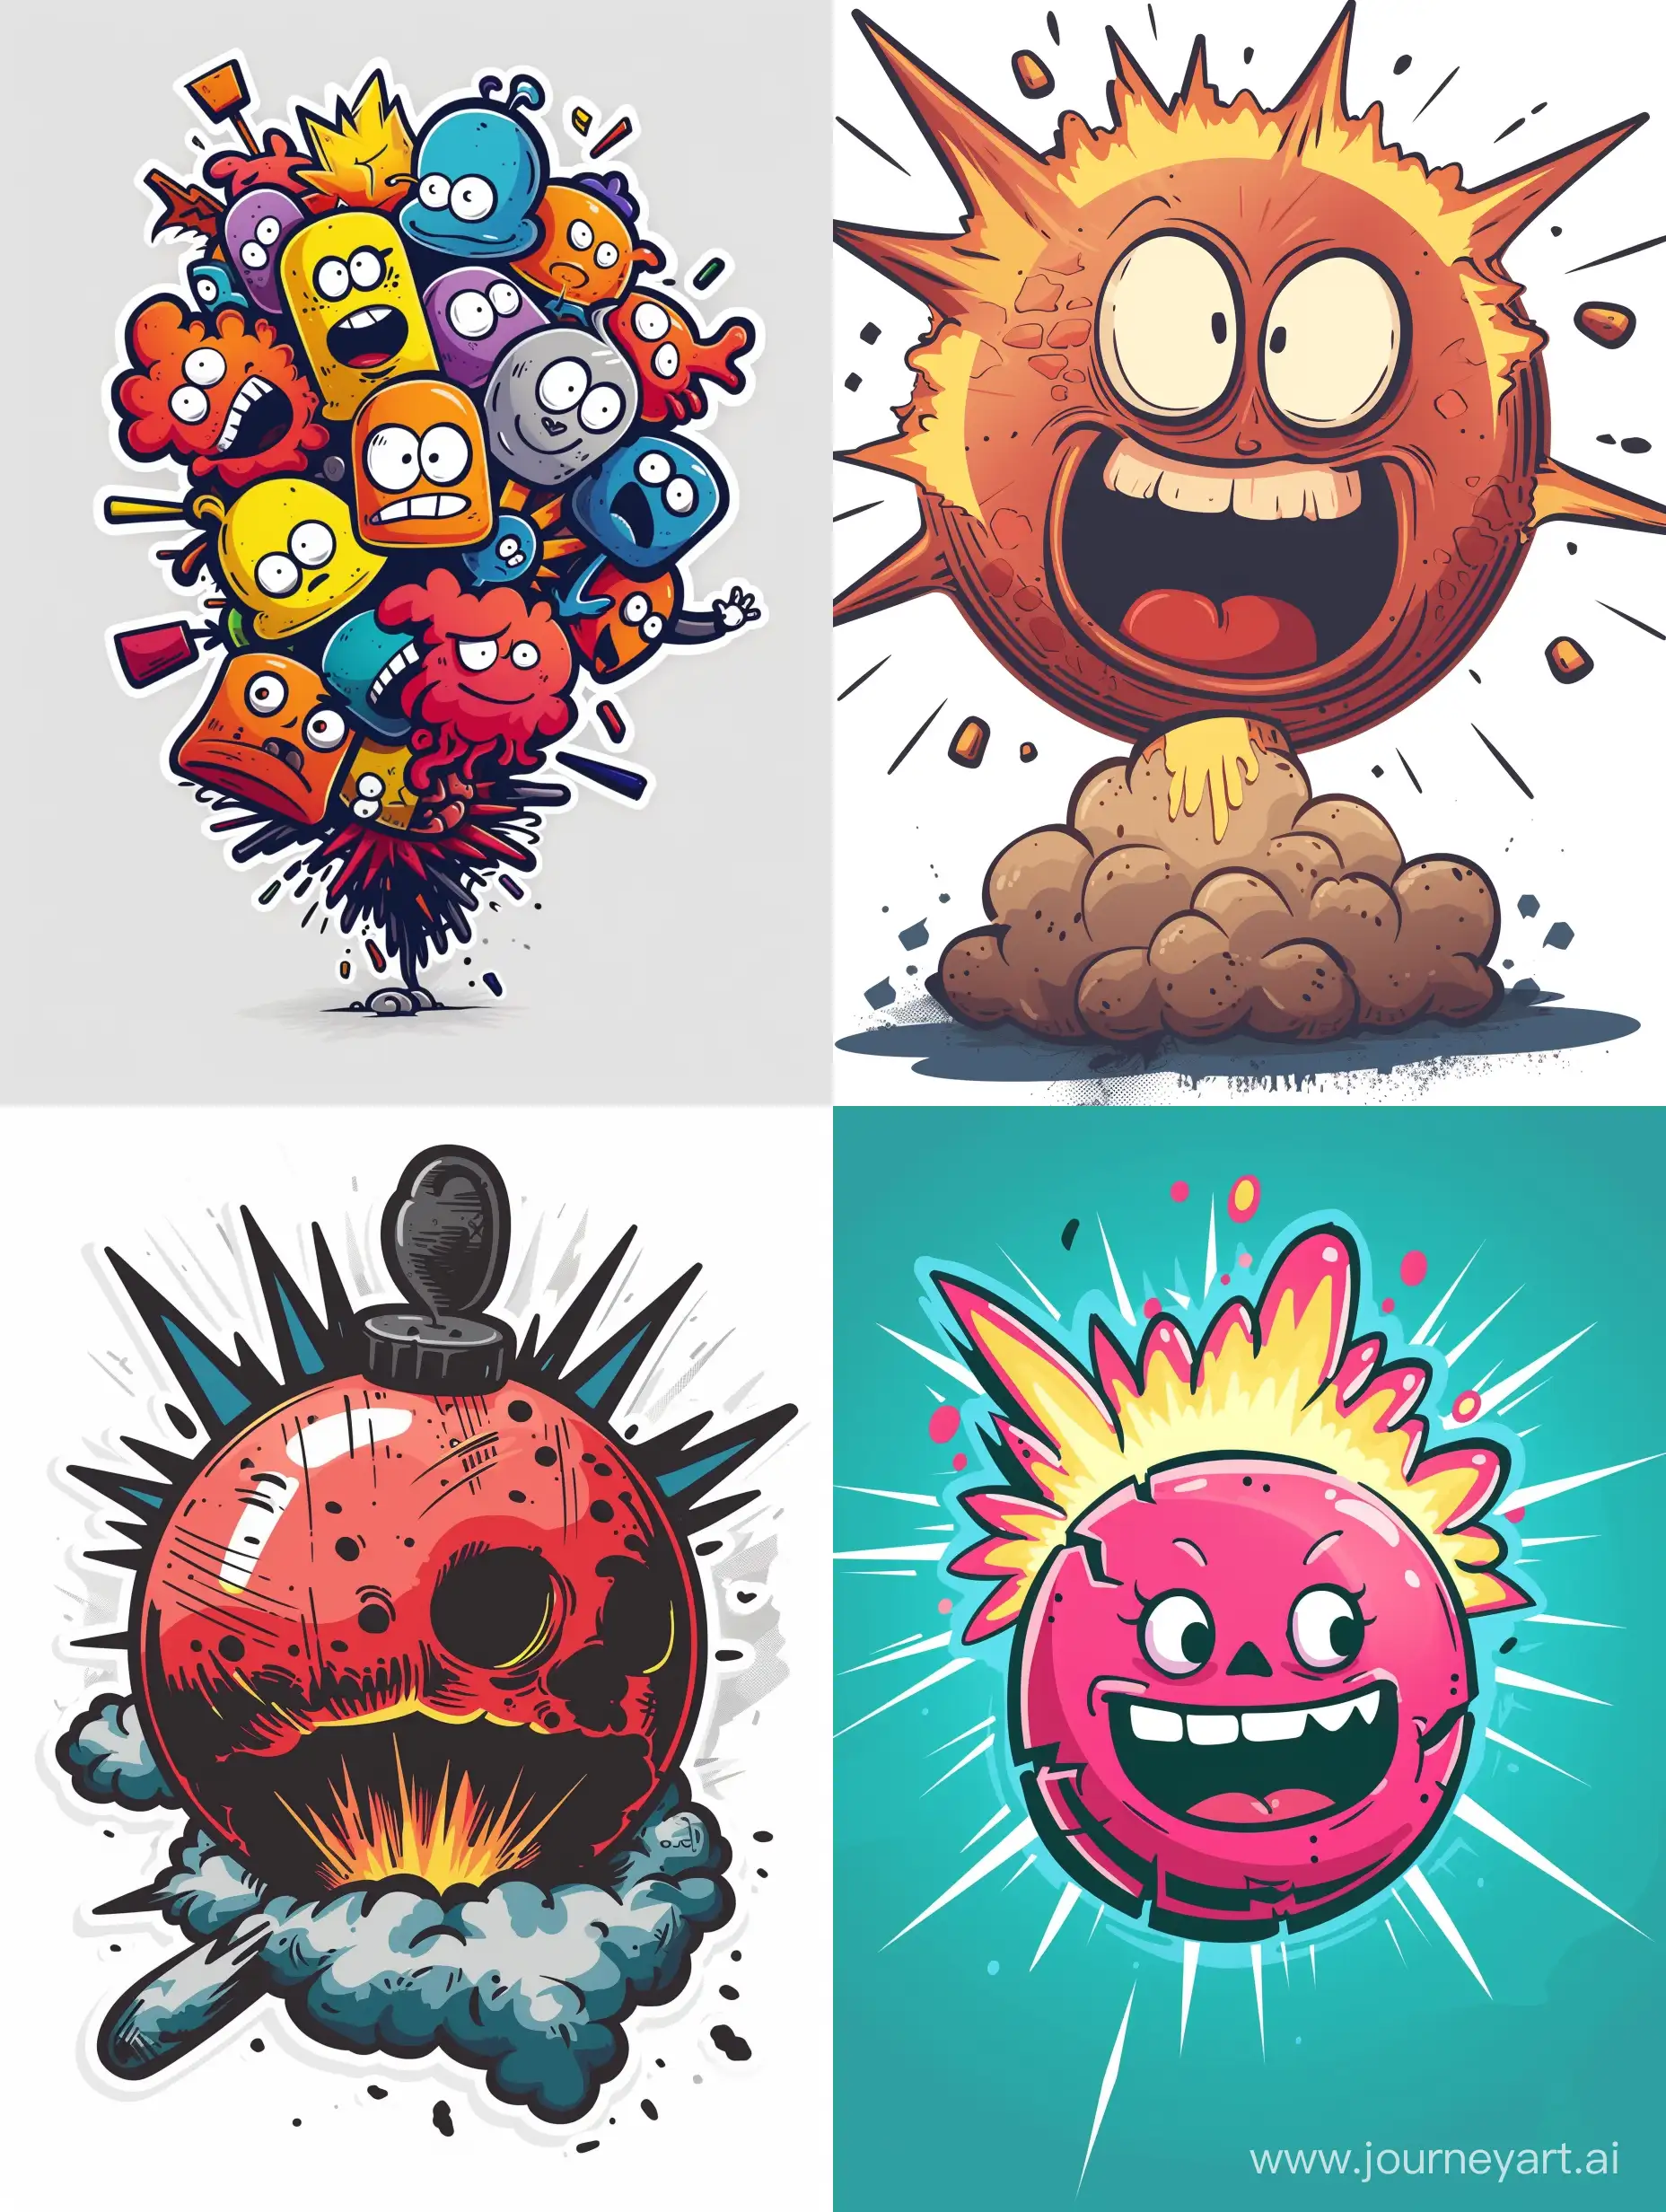 Colorful-Cartoon-Sticker-Bomb-Art-with-Vibrant-Visuals